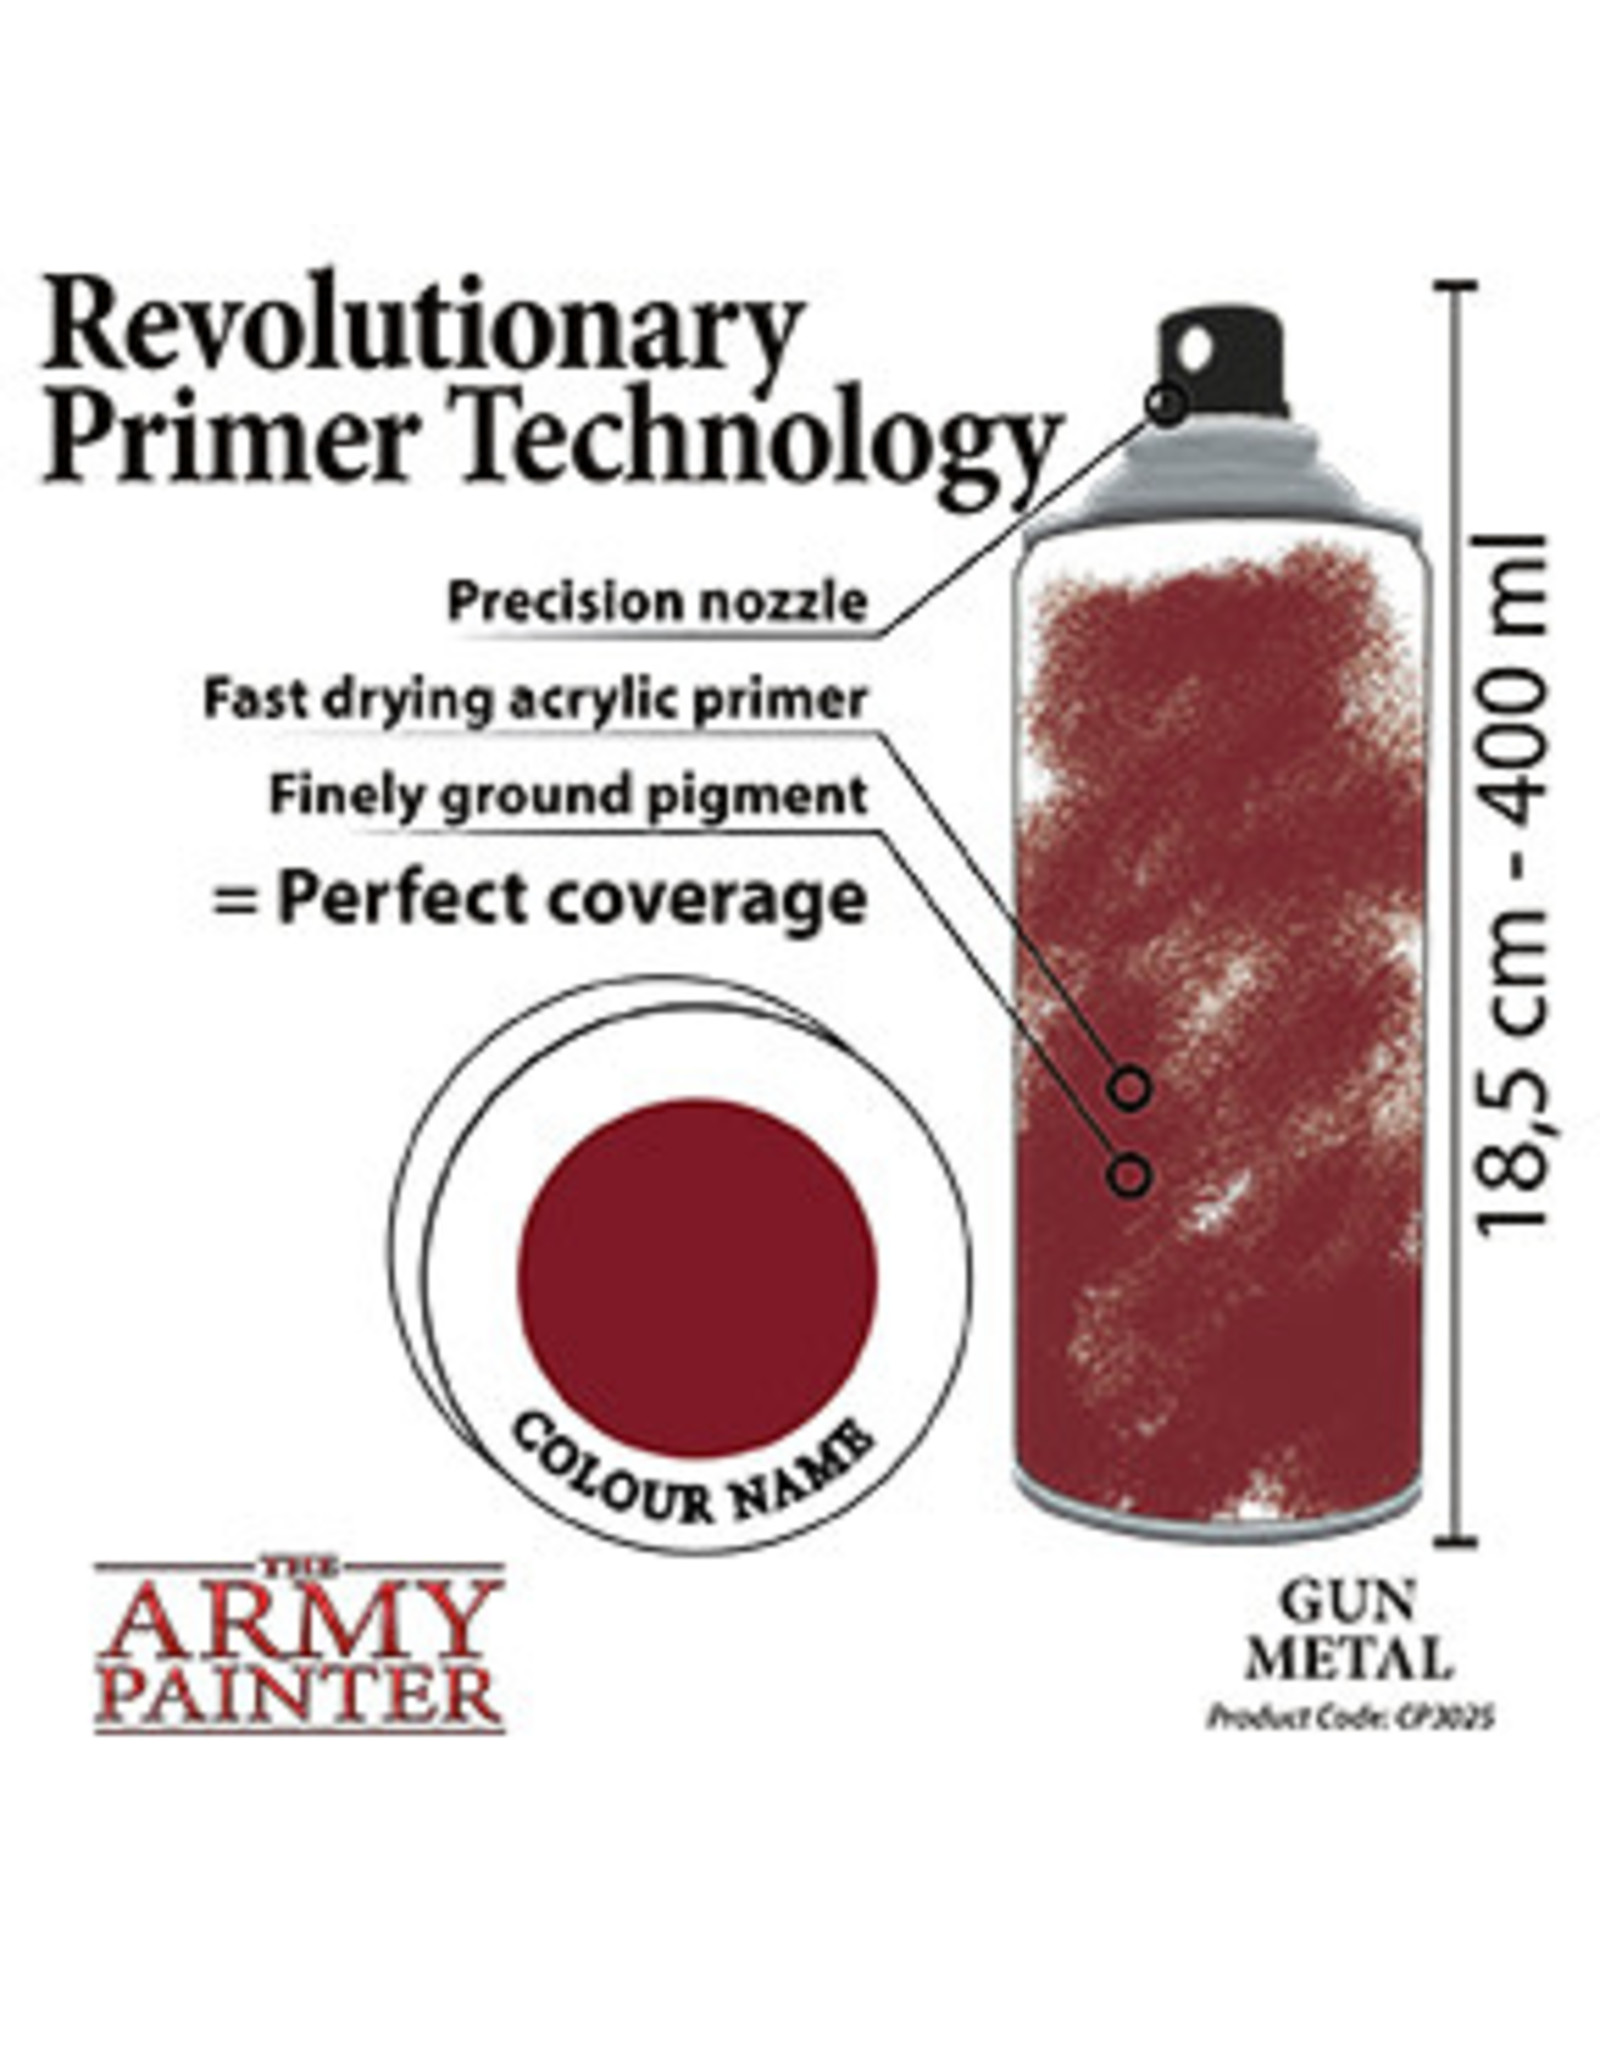 Army Painter Colour Primer Gun Metal